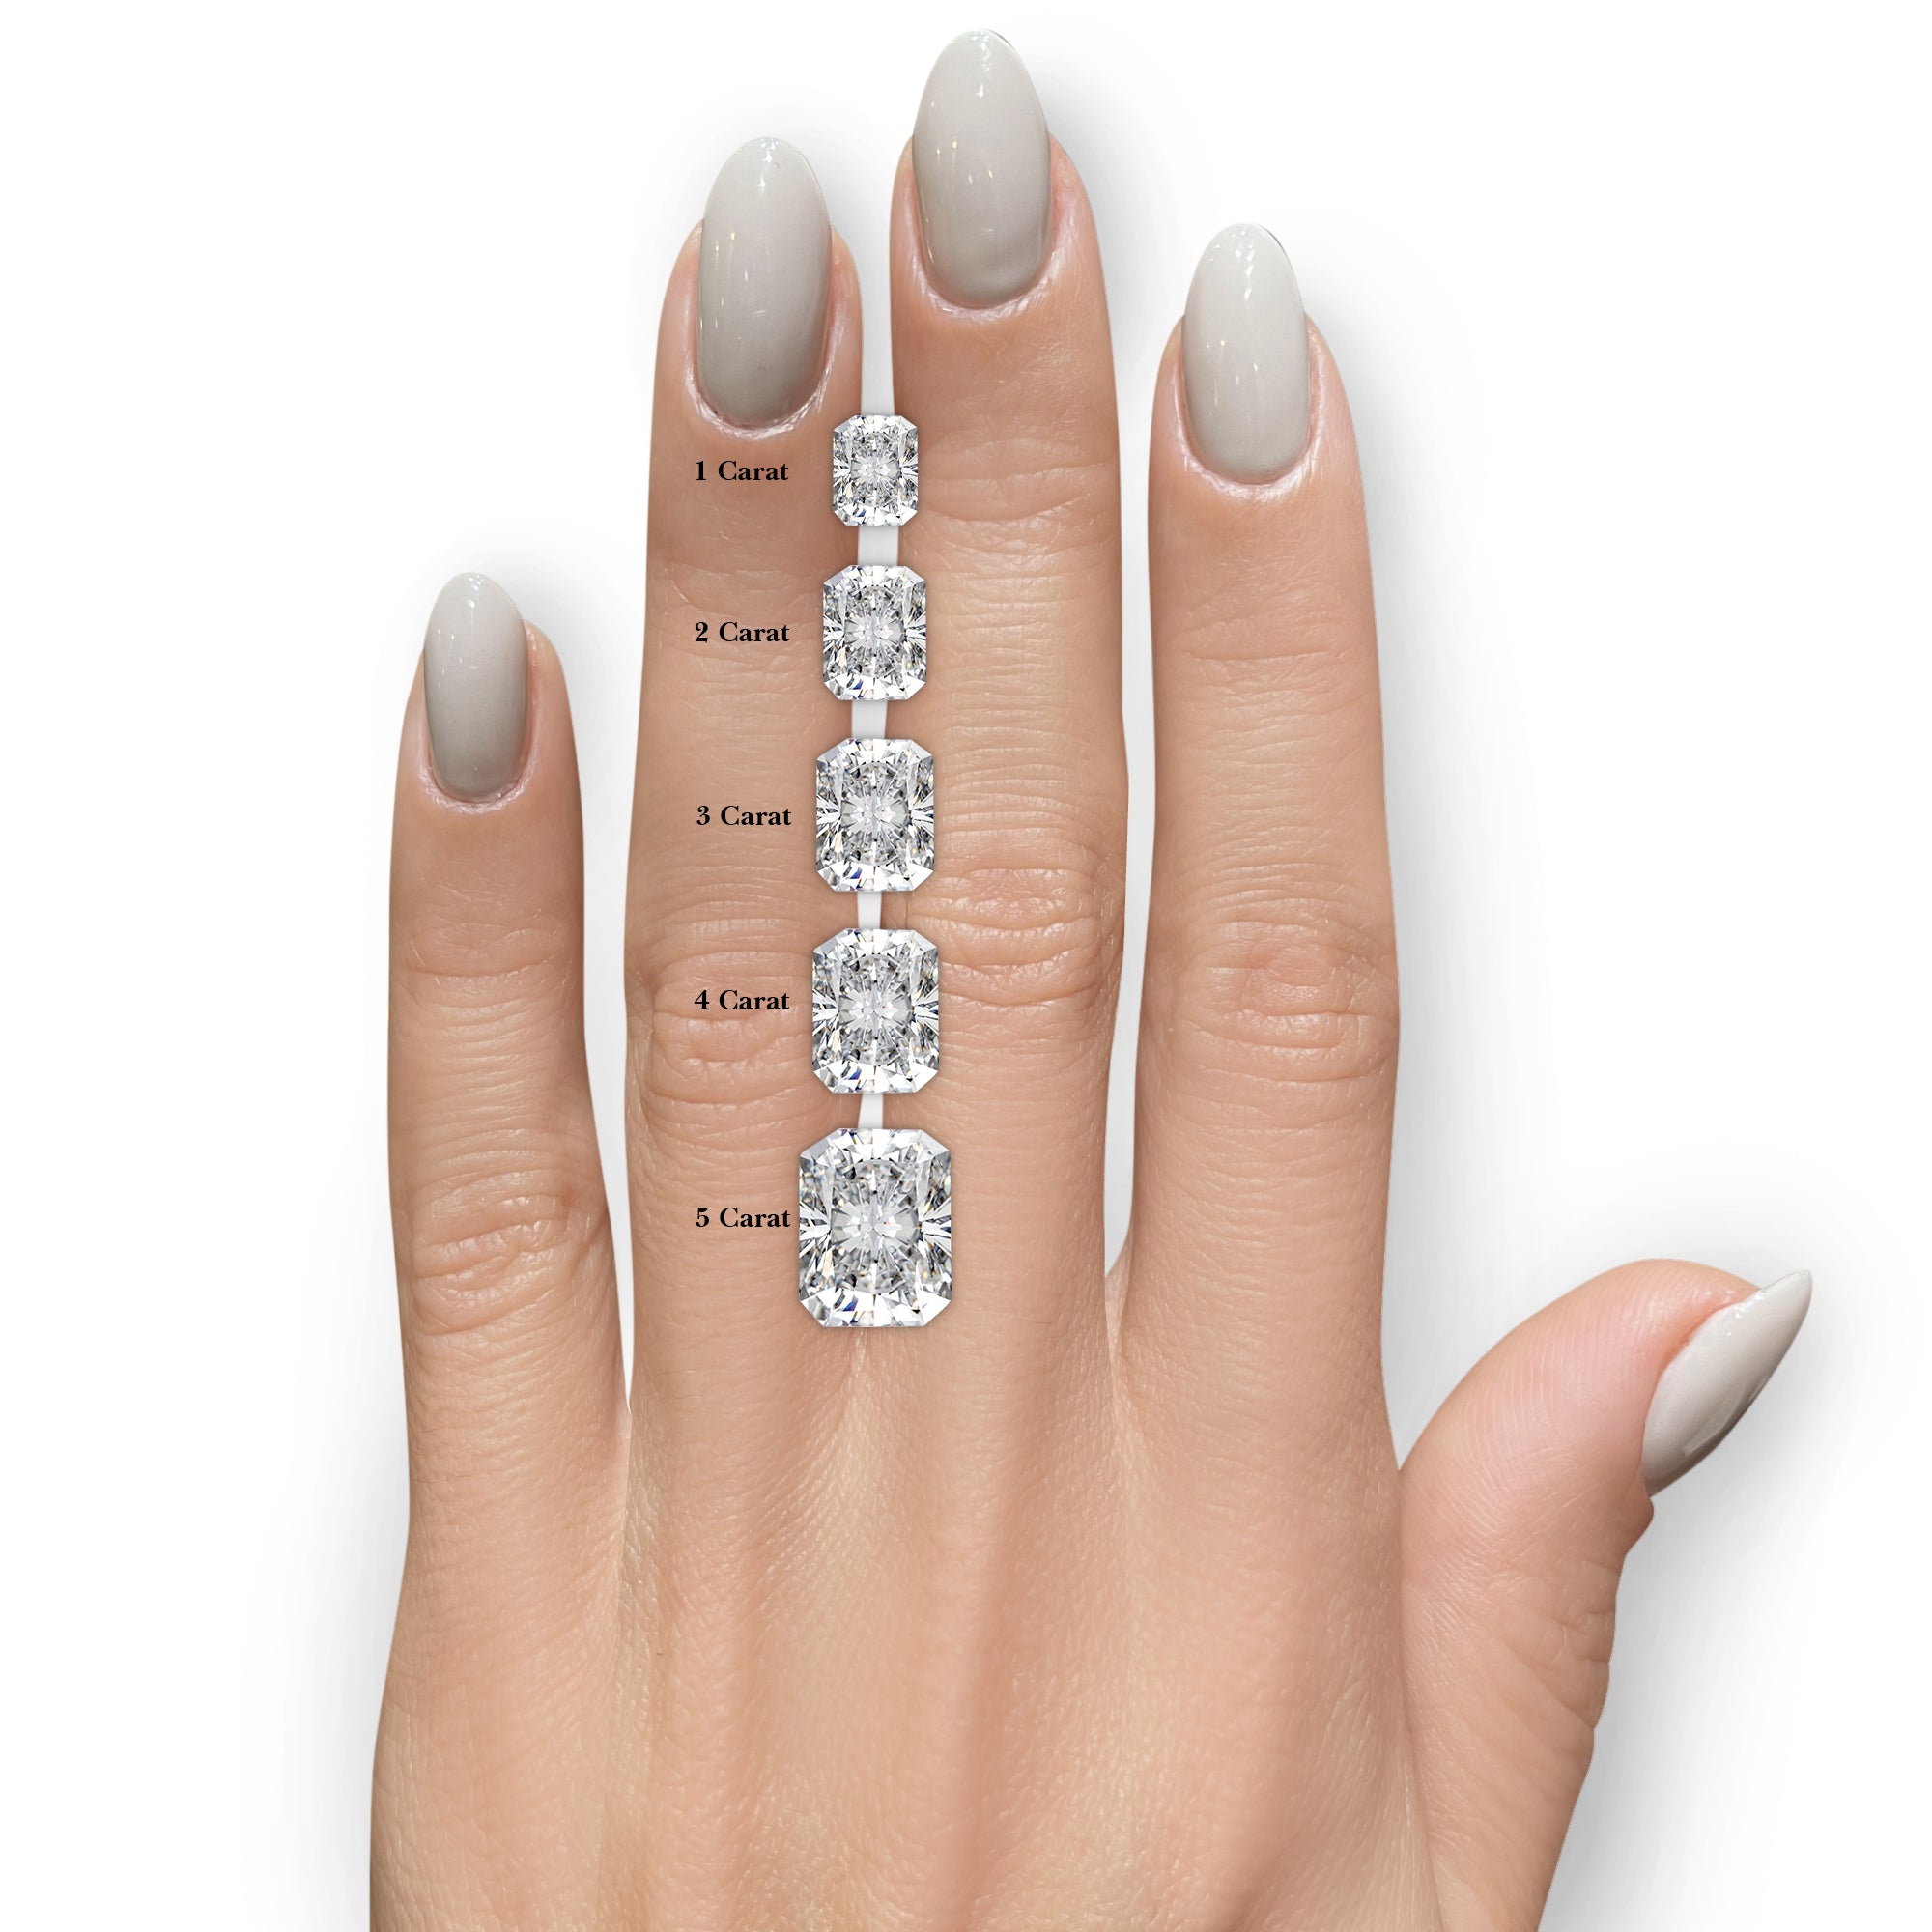 Andrea Moissanite & Diamonds Ring -Platinum